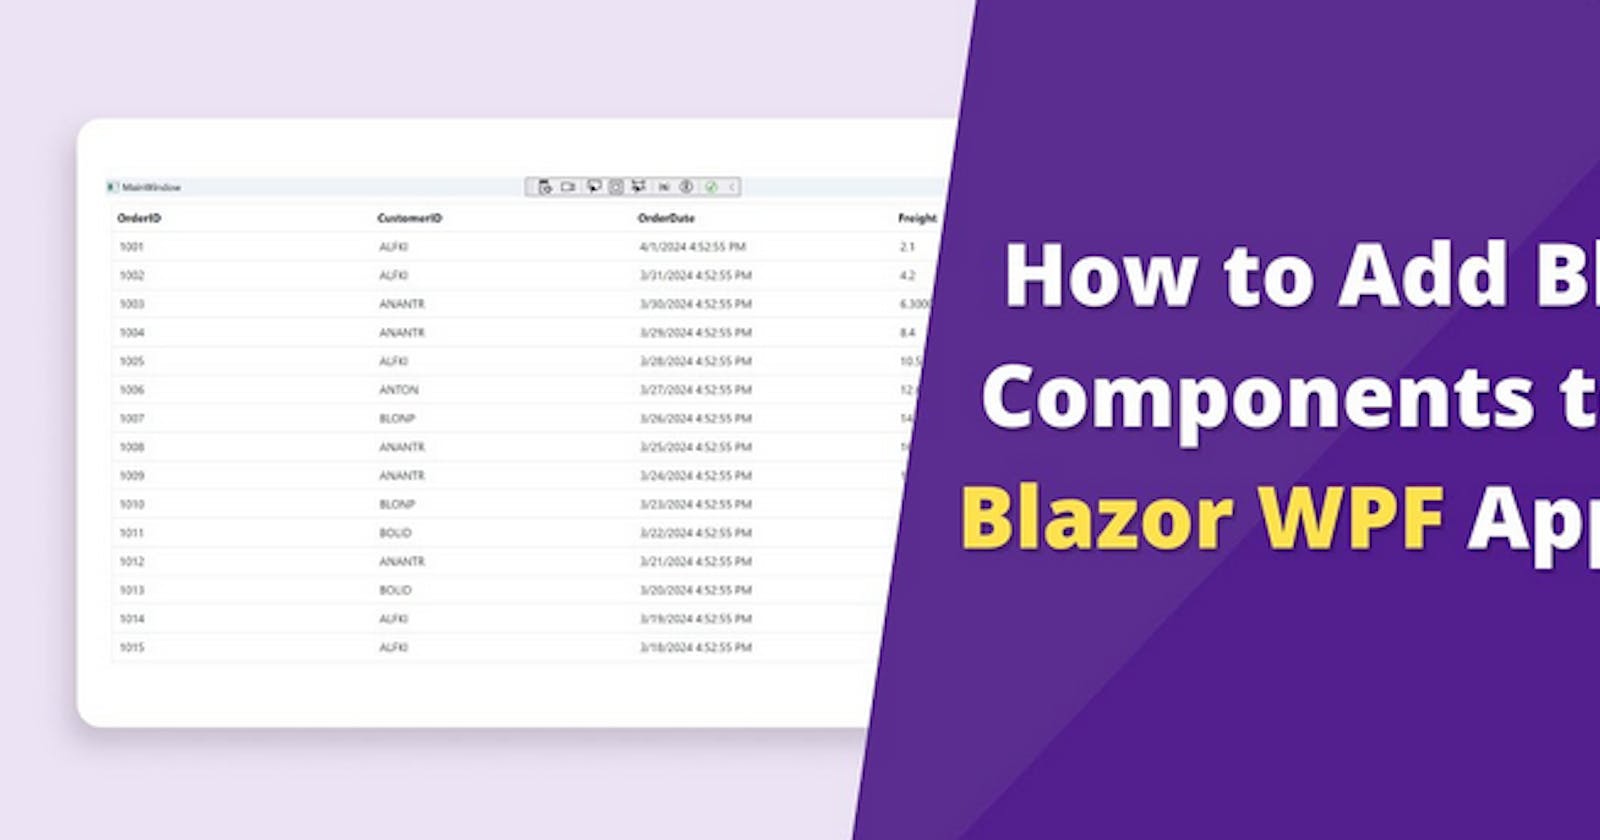 How to Add Blazor Components to a Blazor WPF App